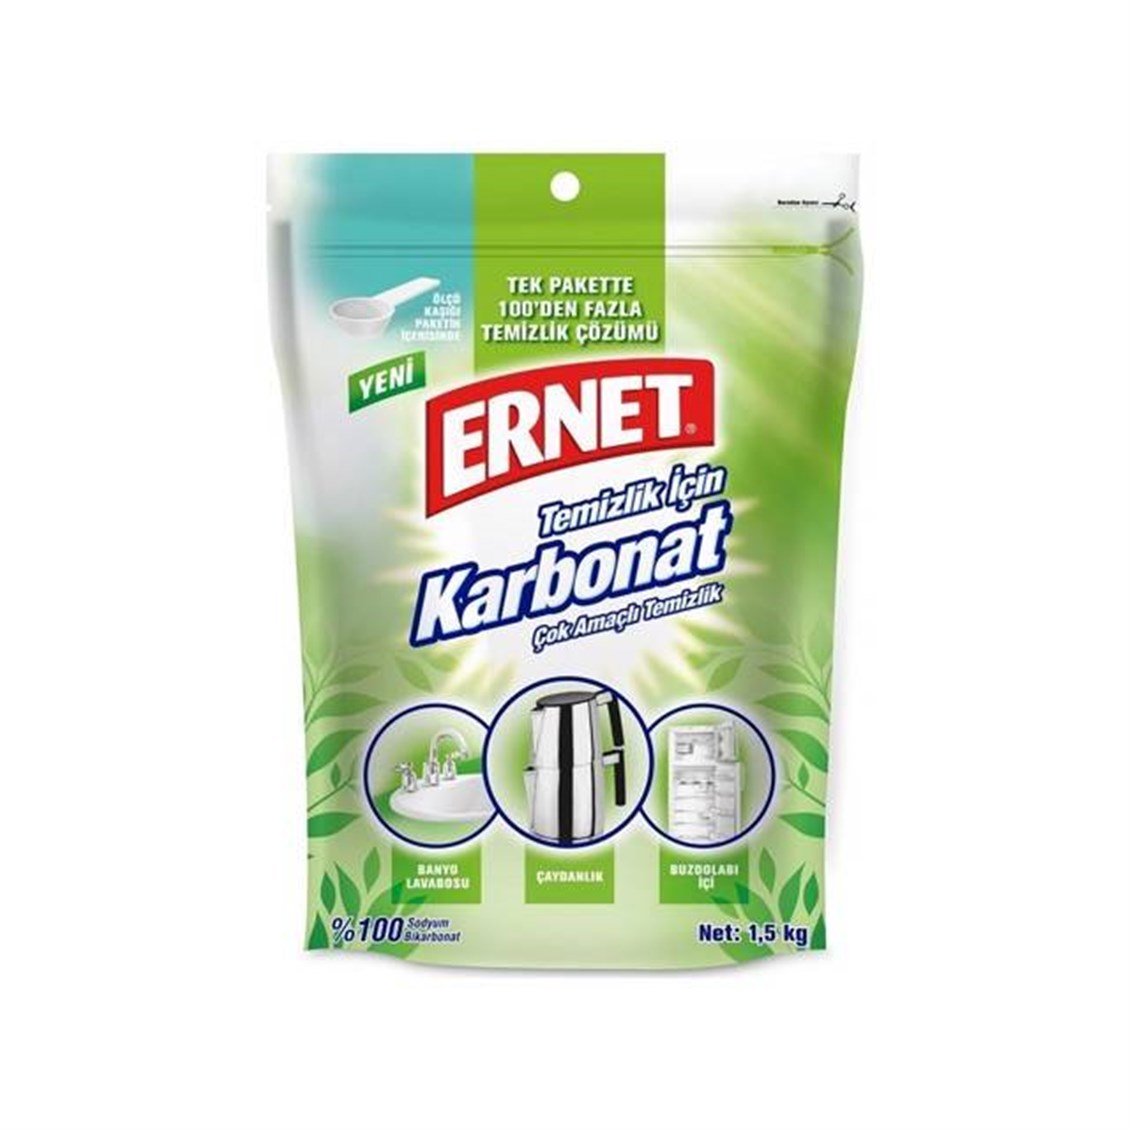 Ernet Temizlik İçi Karbonat 1.5 kg - Onur Market